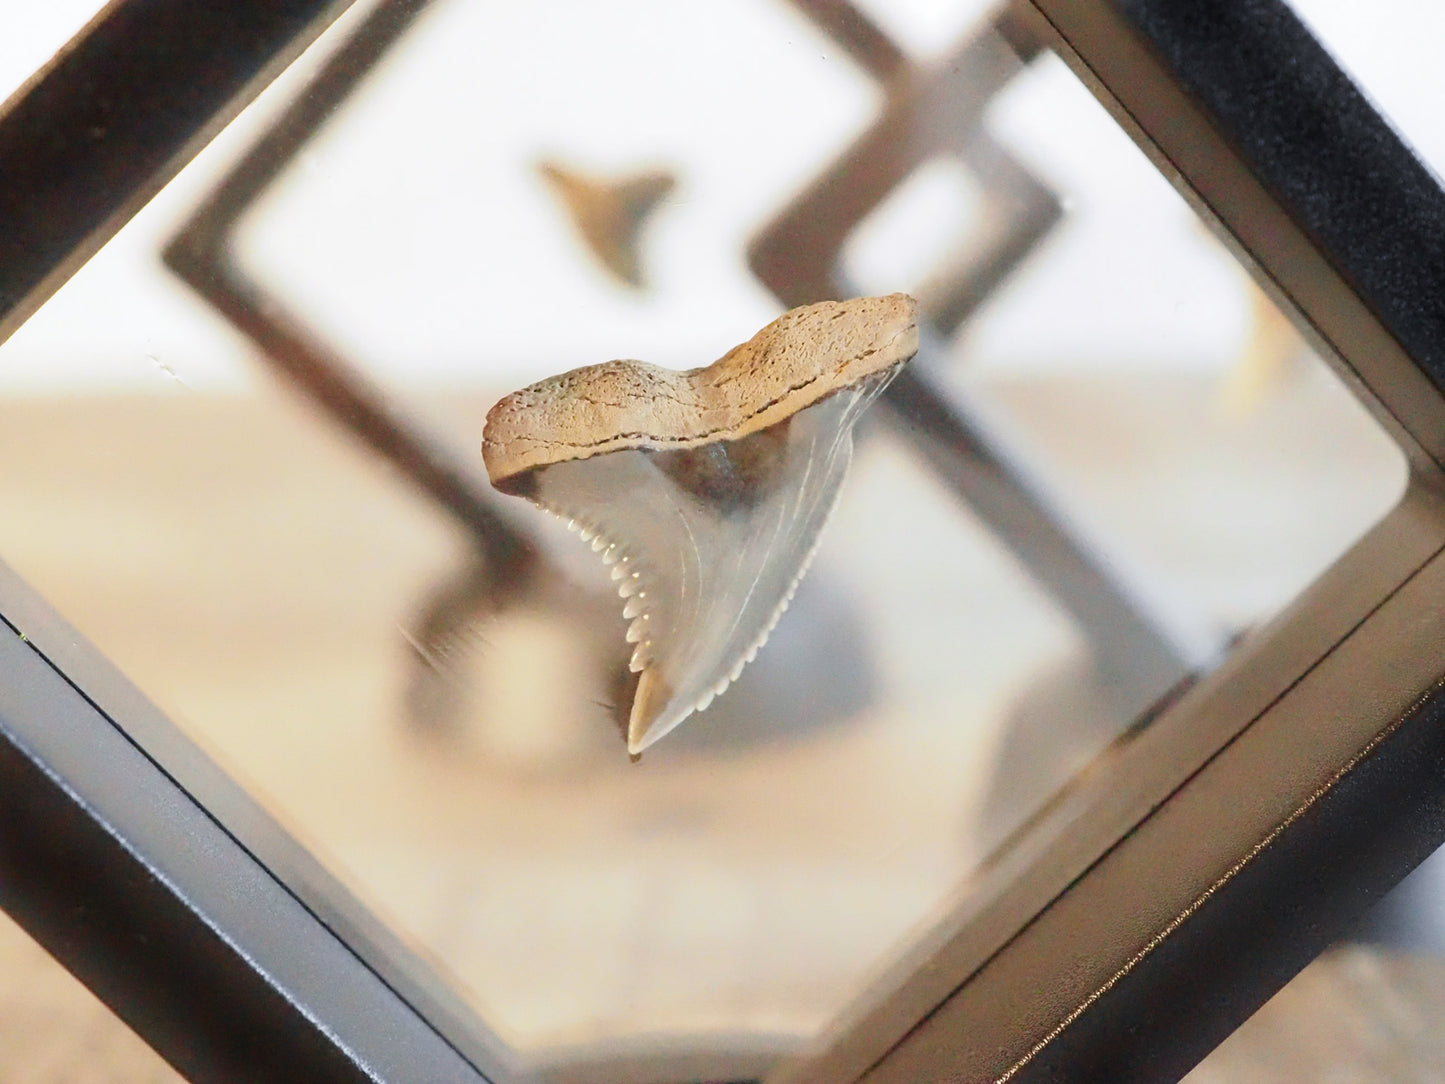 Hemipristis Serra Fossilized Shark Teeth in Floating Frames